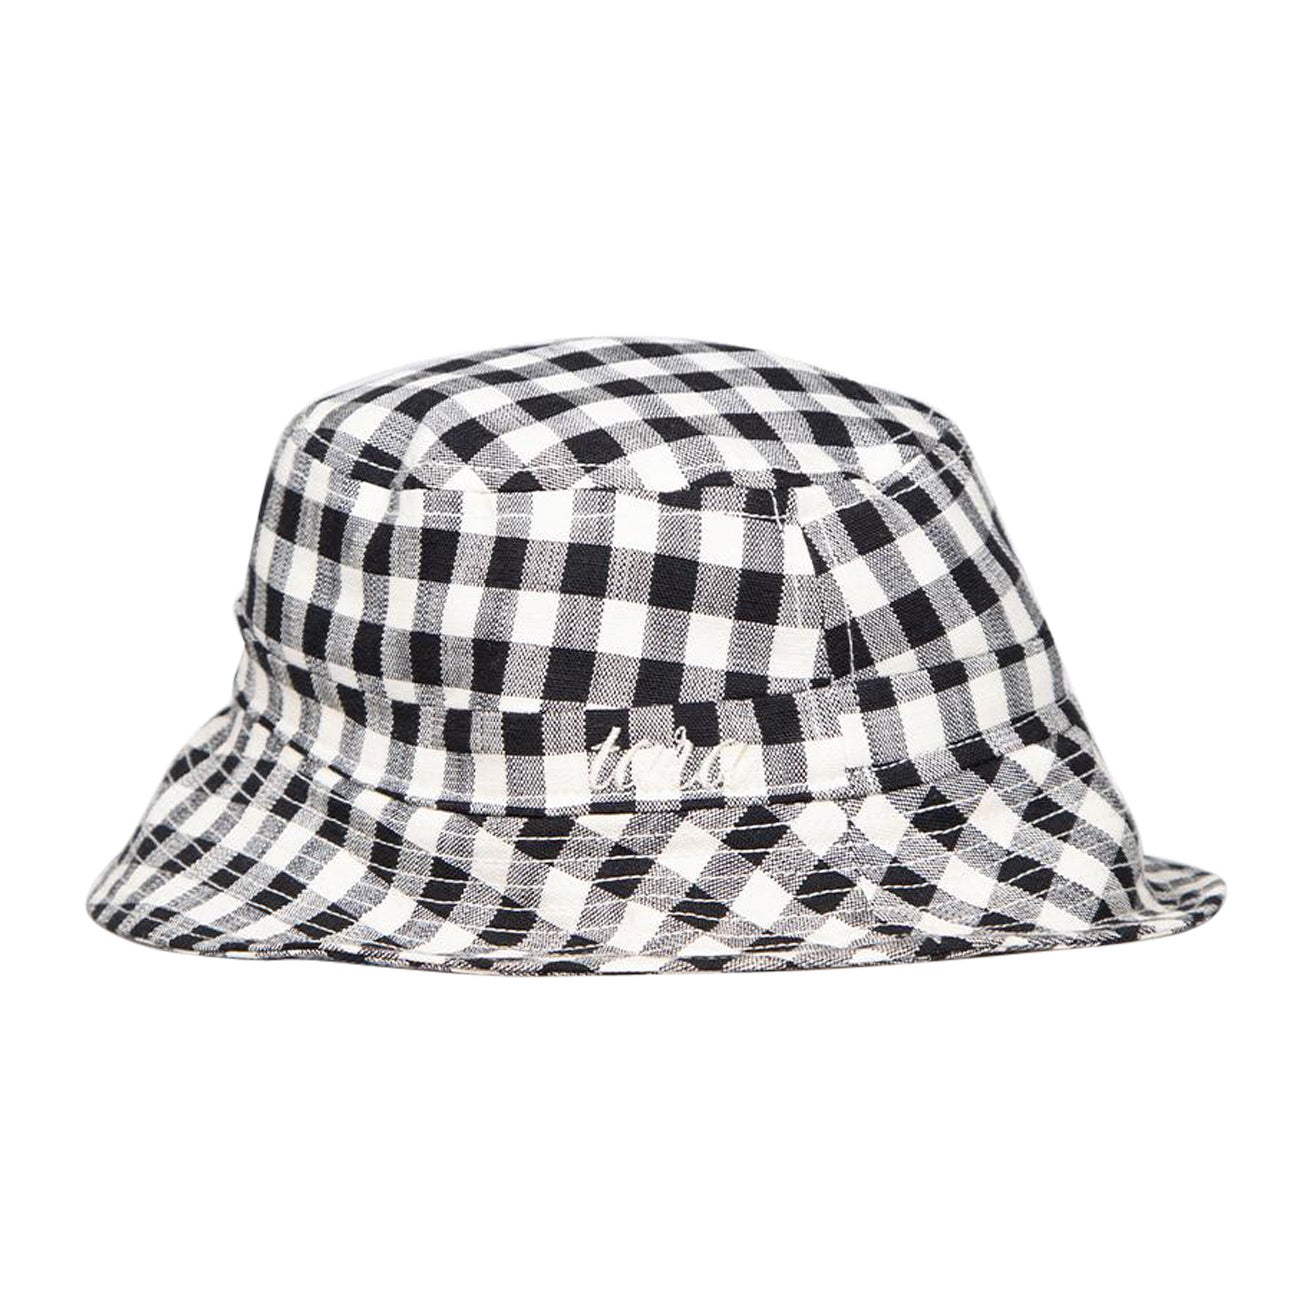 Tara Jarmon Gingham Pattern Bucket Hat For Sale